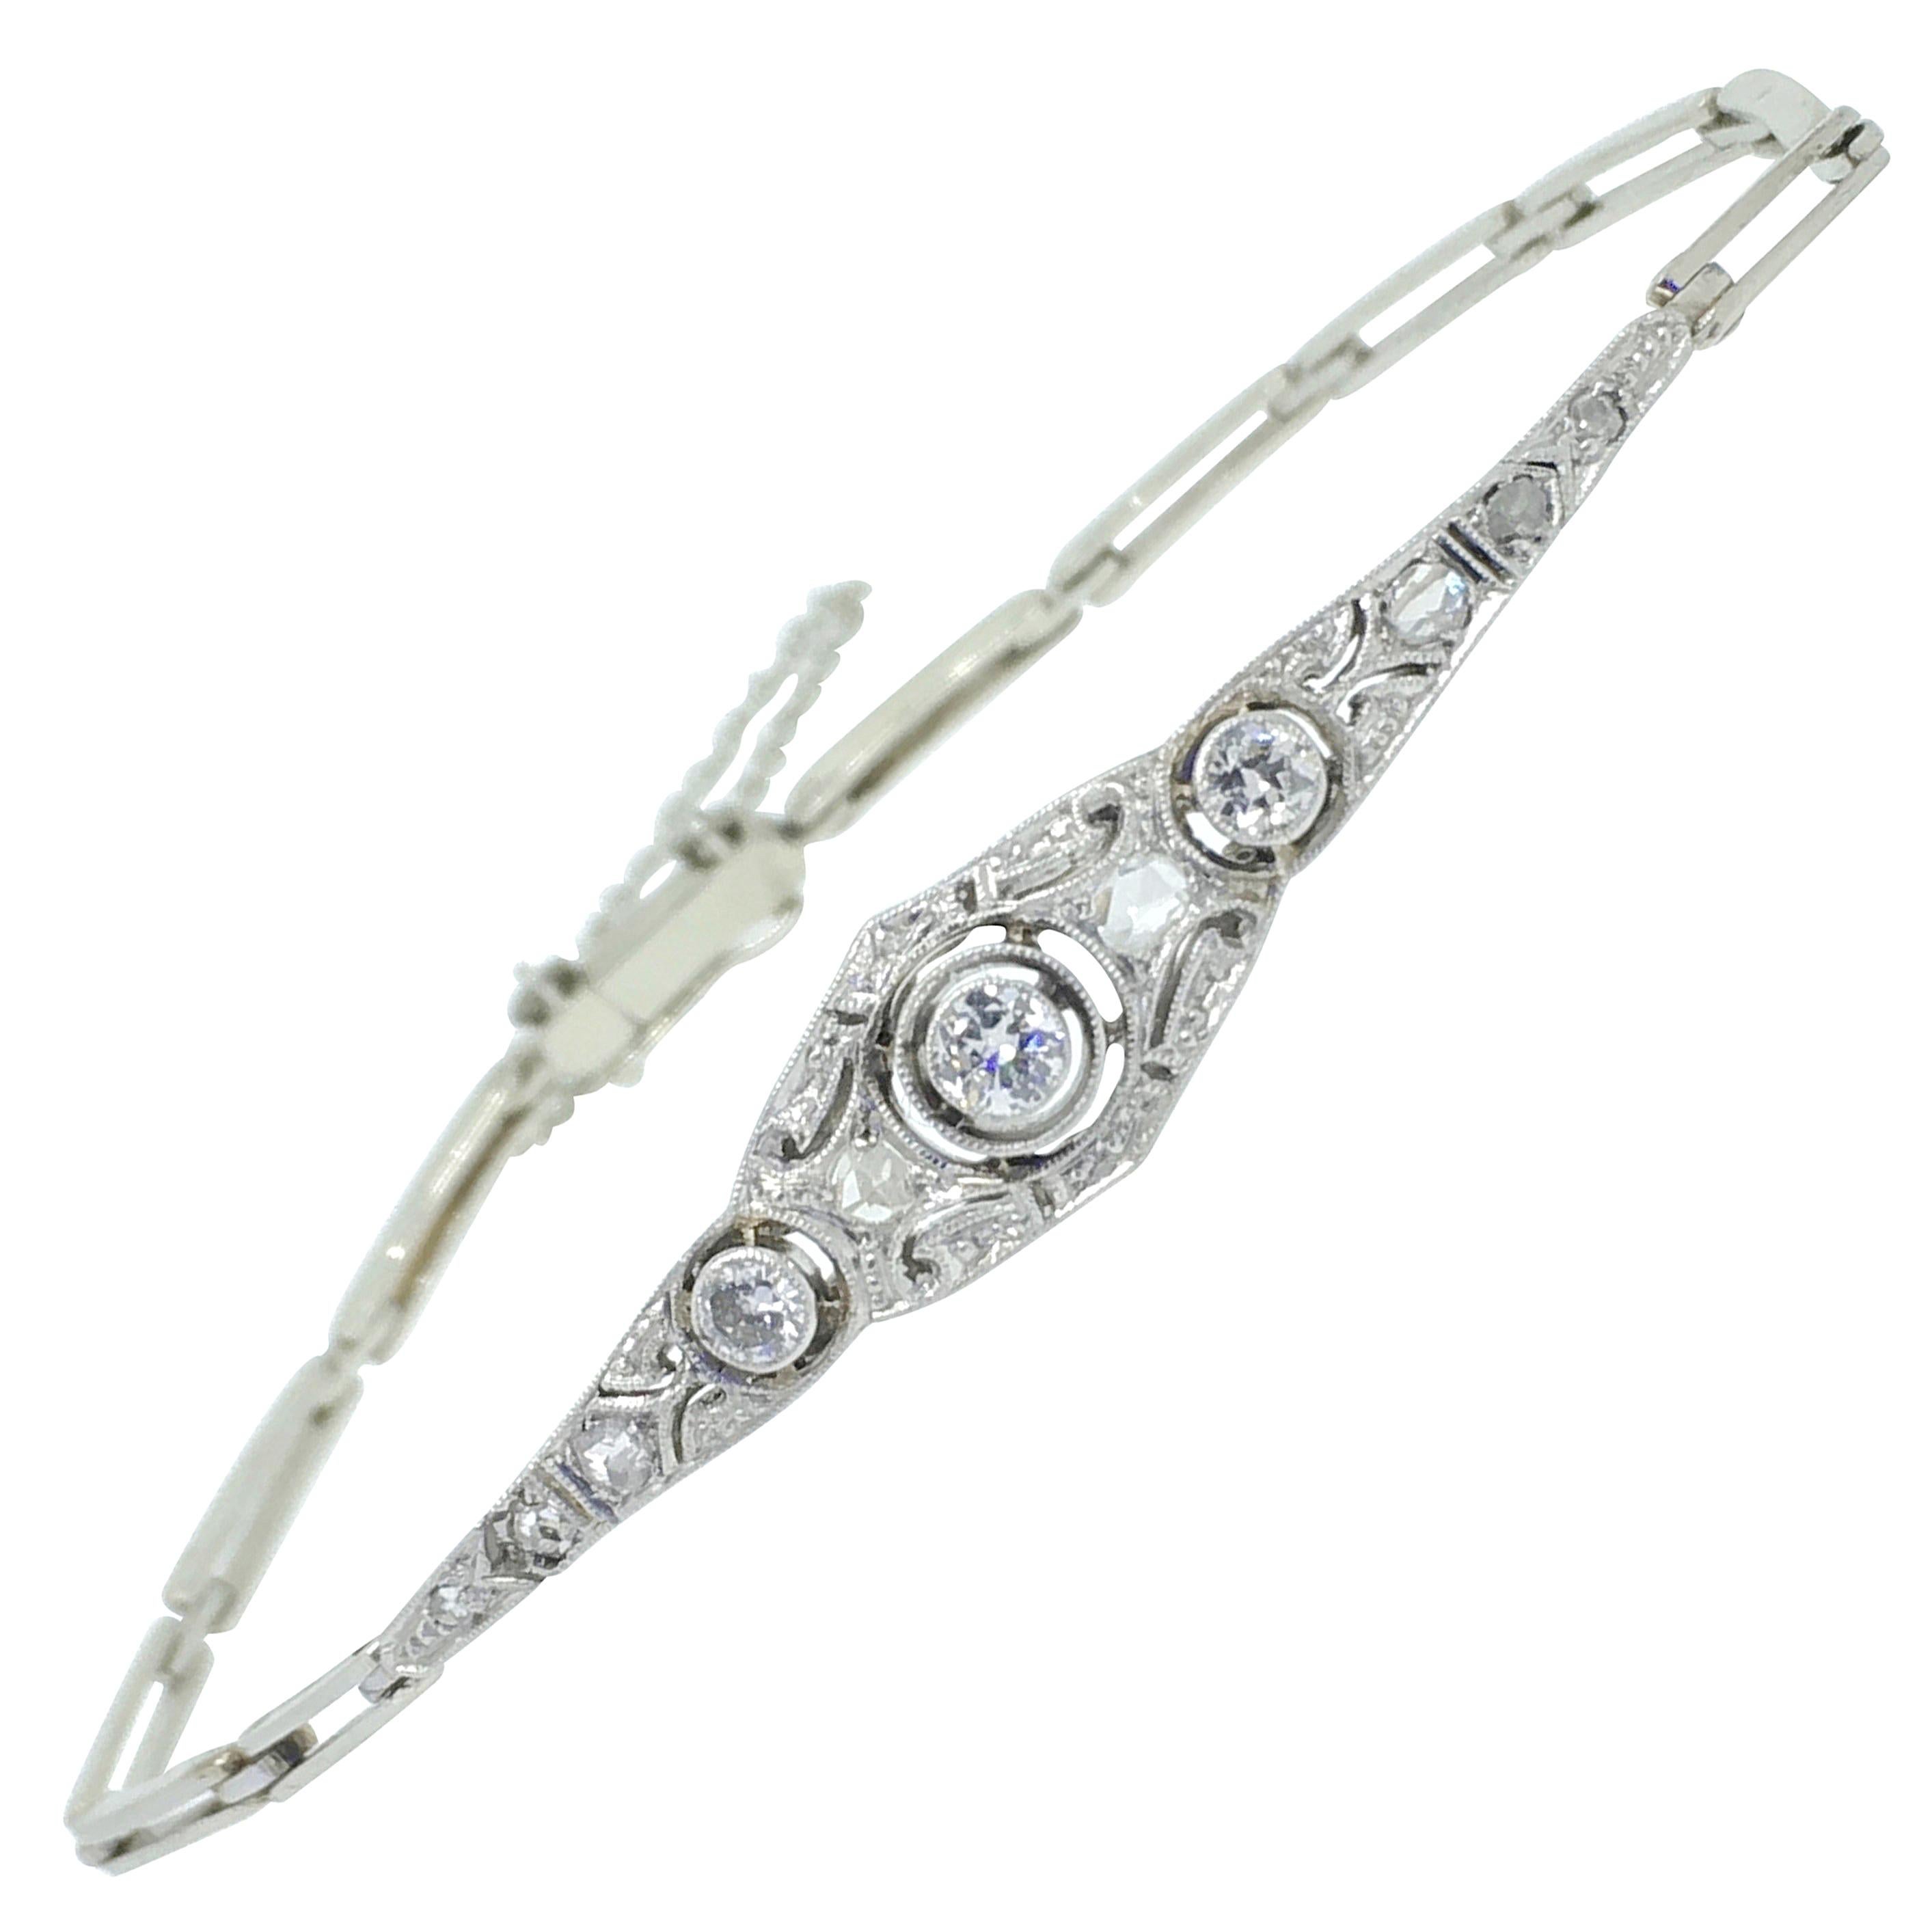 Bracelet, Art Deco, White Gold, Diamond, 1920